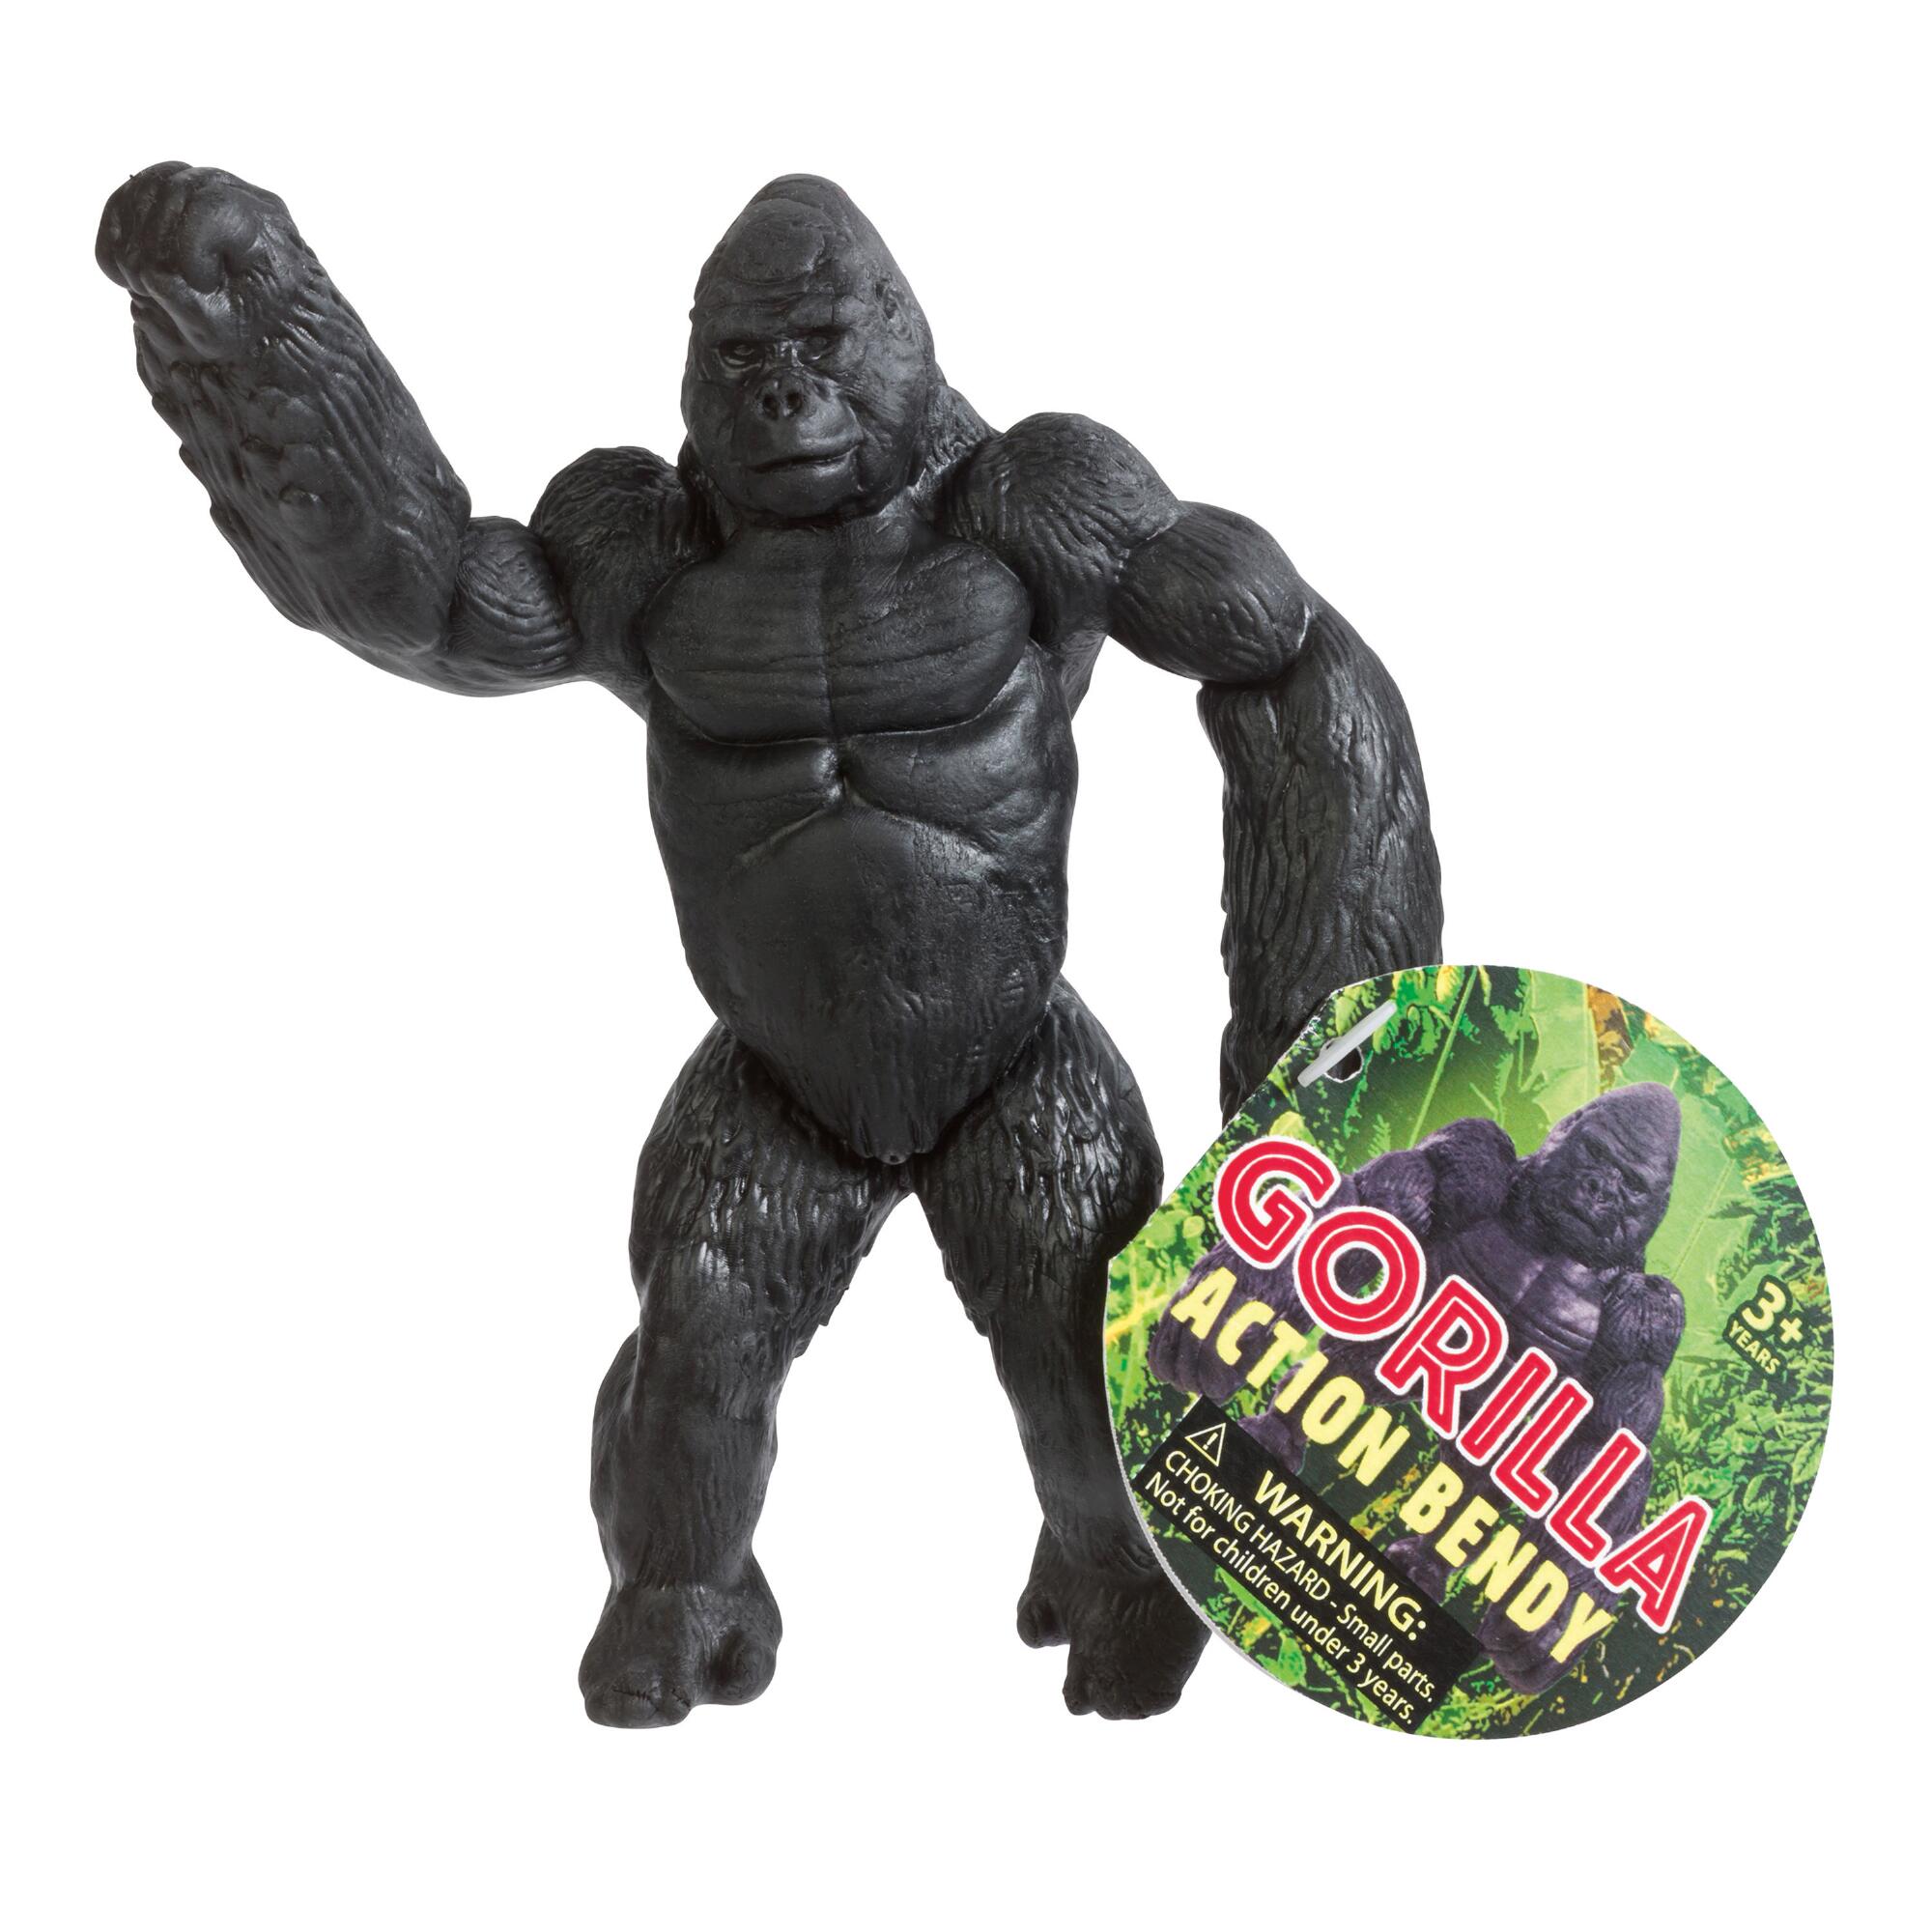 Gorilla Action Bendy Toy Set of 2 by World Market